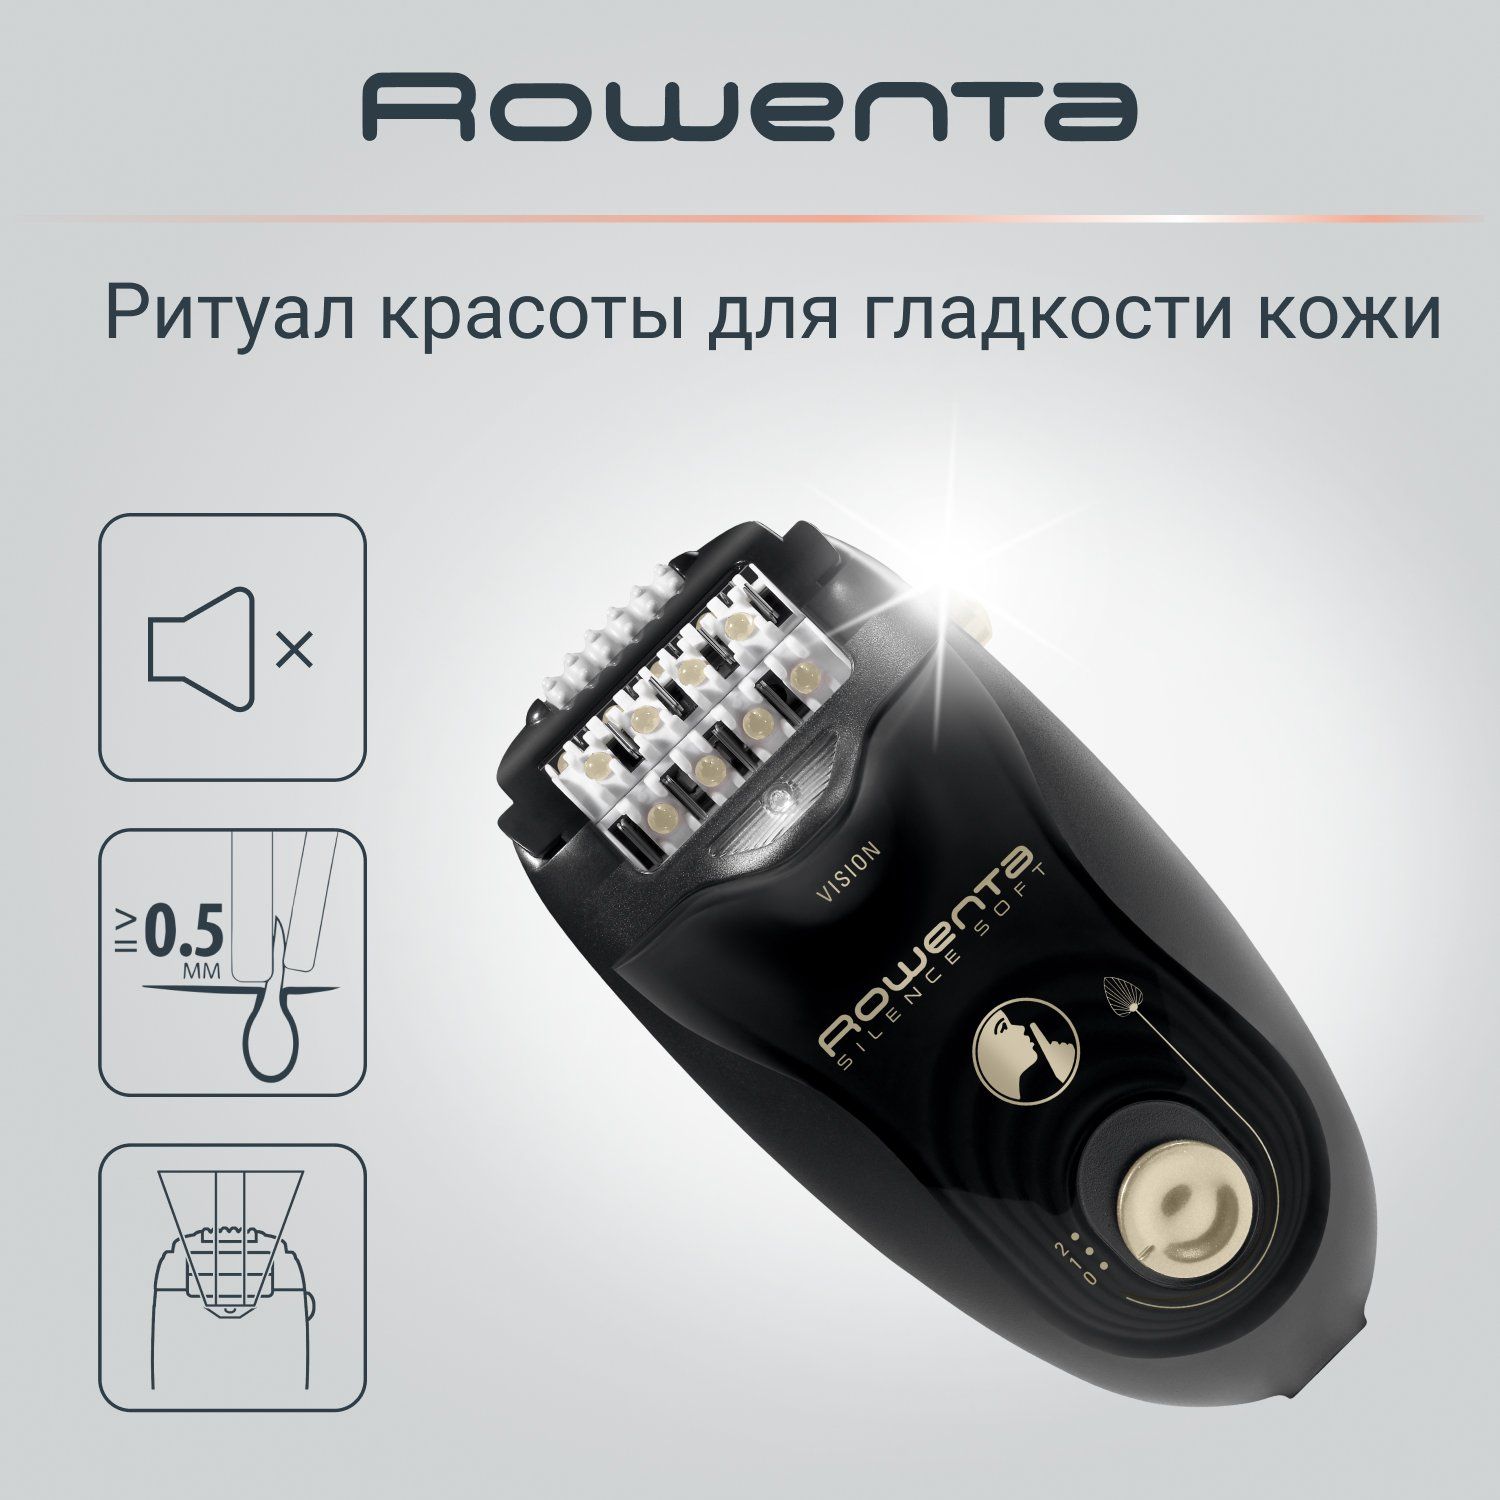 Эпилятор Rowenta Silence Soft EP5628F0, черный эпилятор rowenta spa sensation ep9470f0